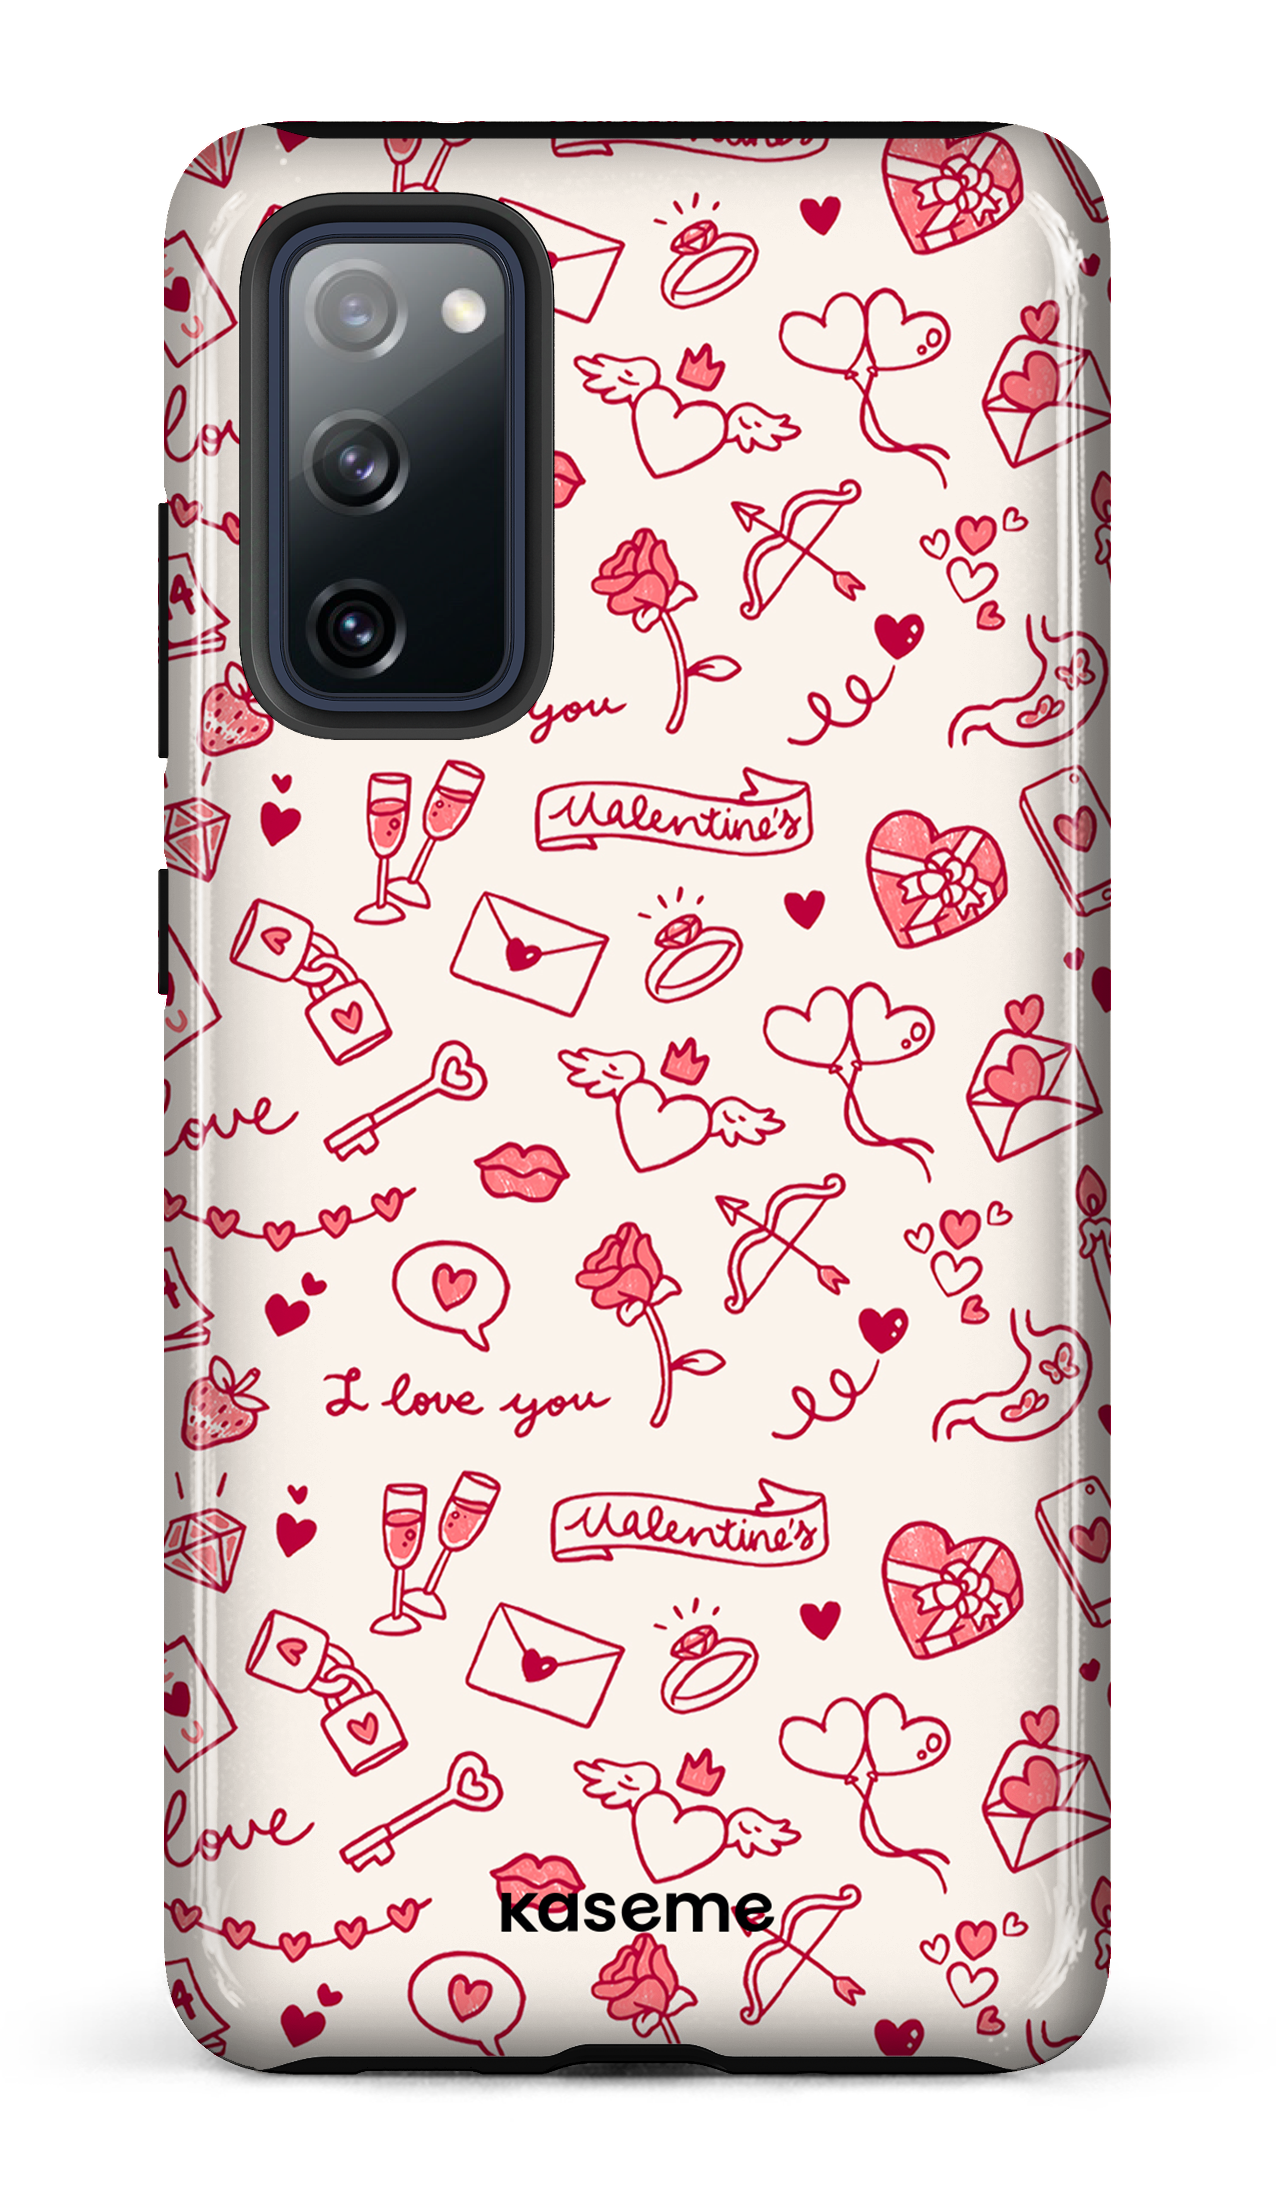 My Valentine - Galaxy S20 FE